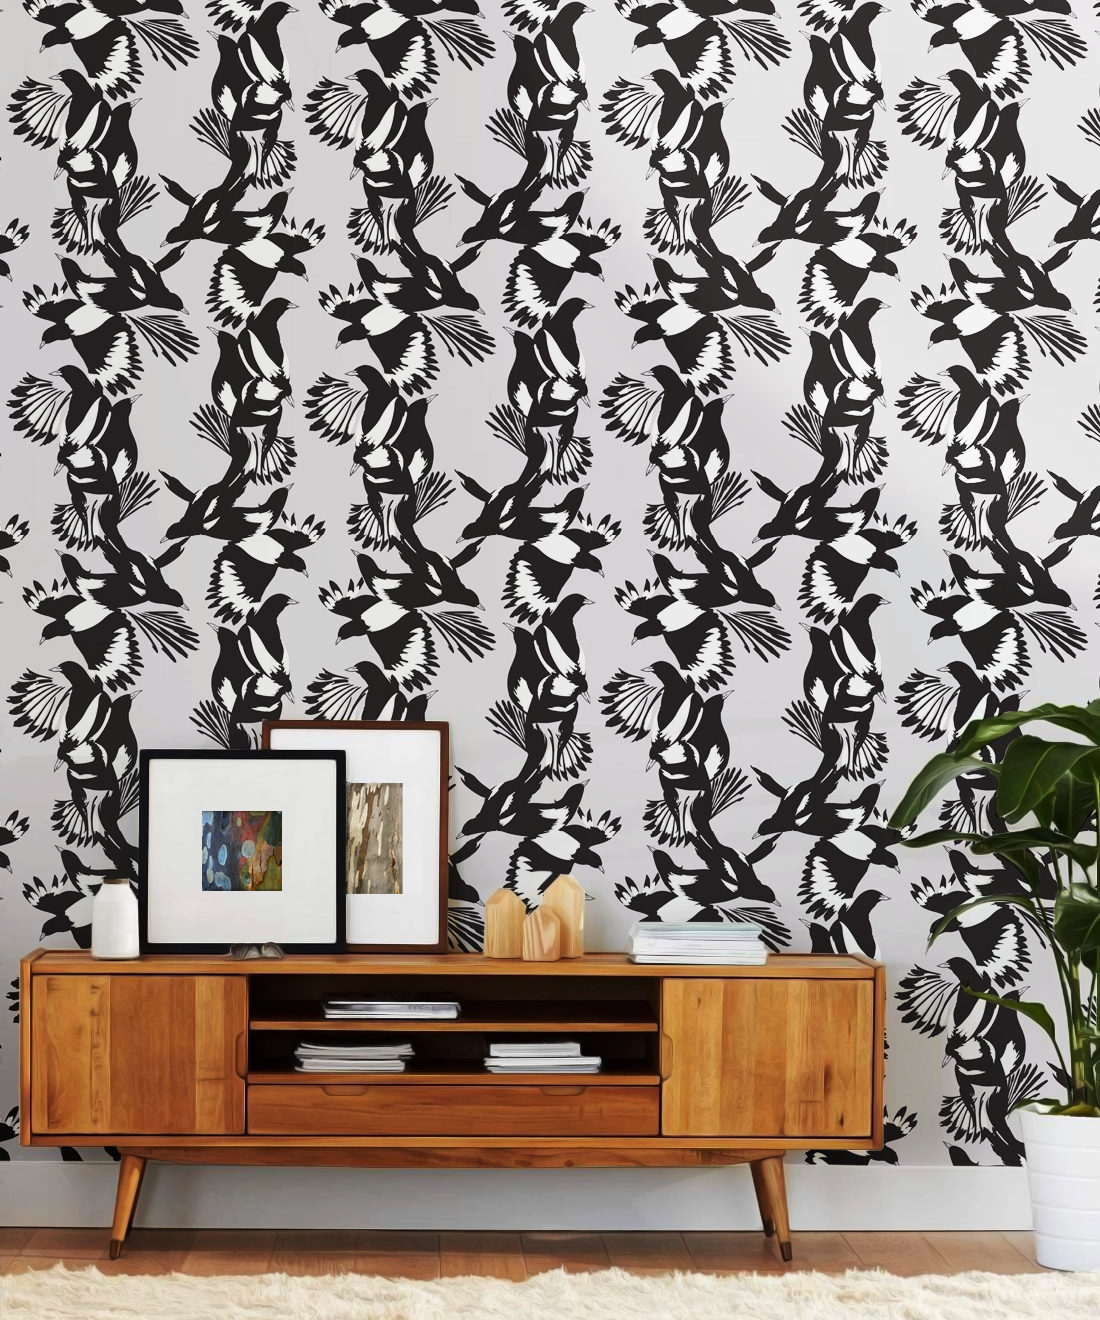 Magpie Wallpaper - Milton & King - Kingdom Home - Papel Pintado Pájaro - Insitu Blanco y Negro